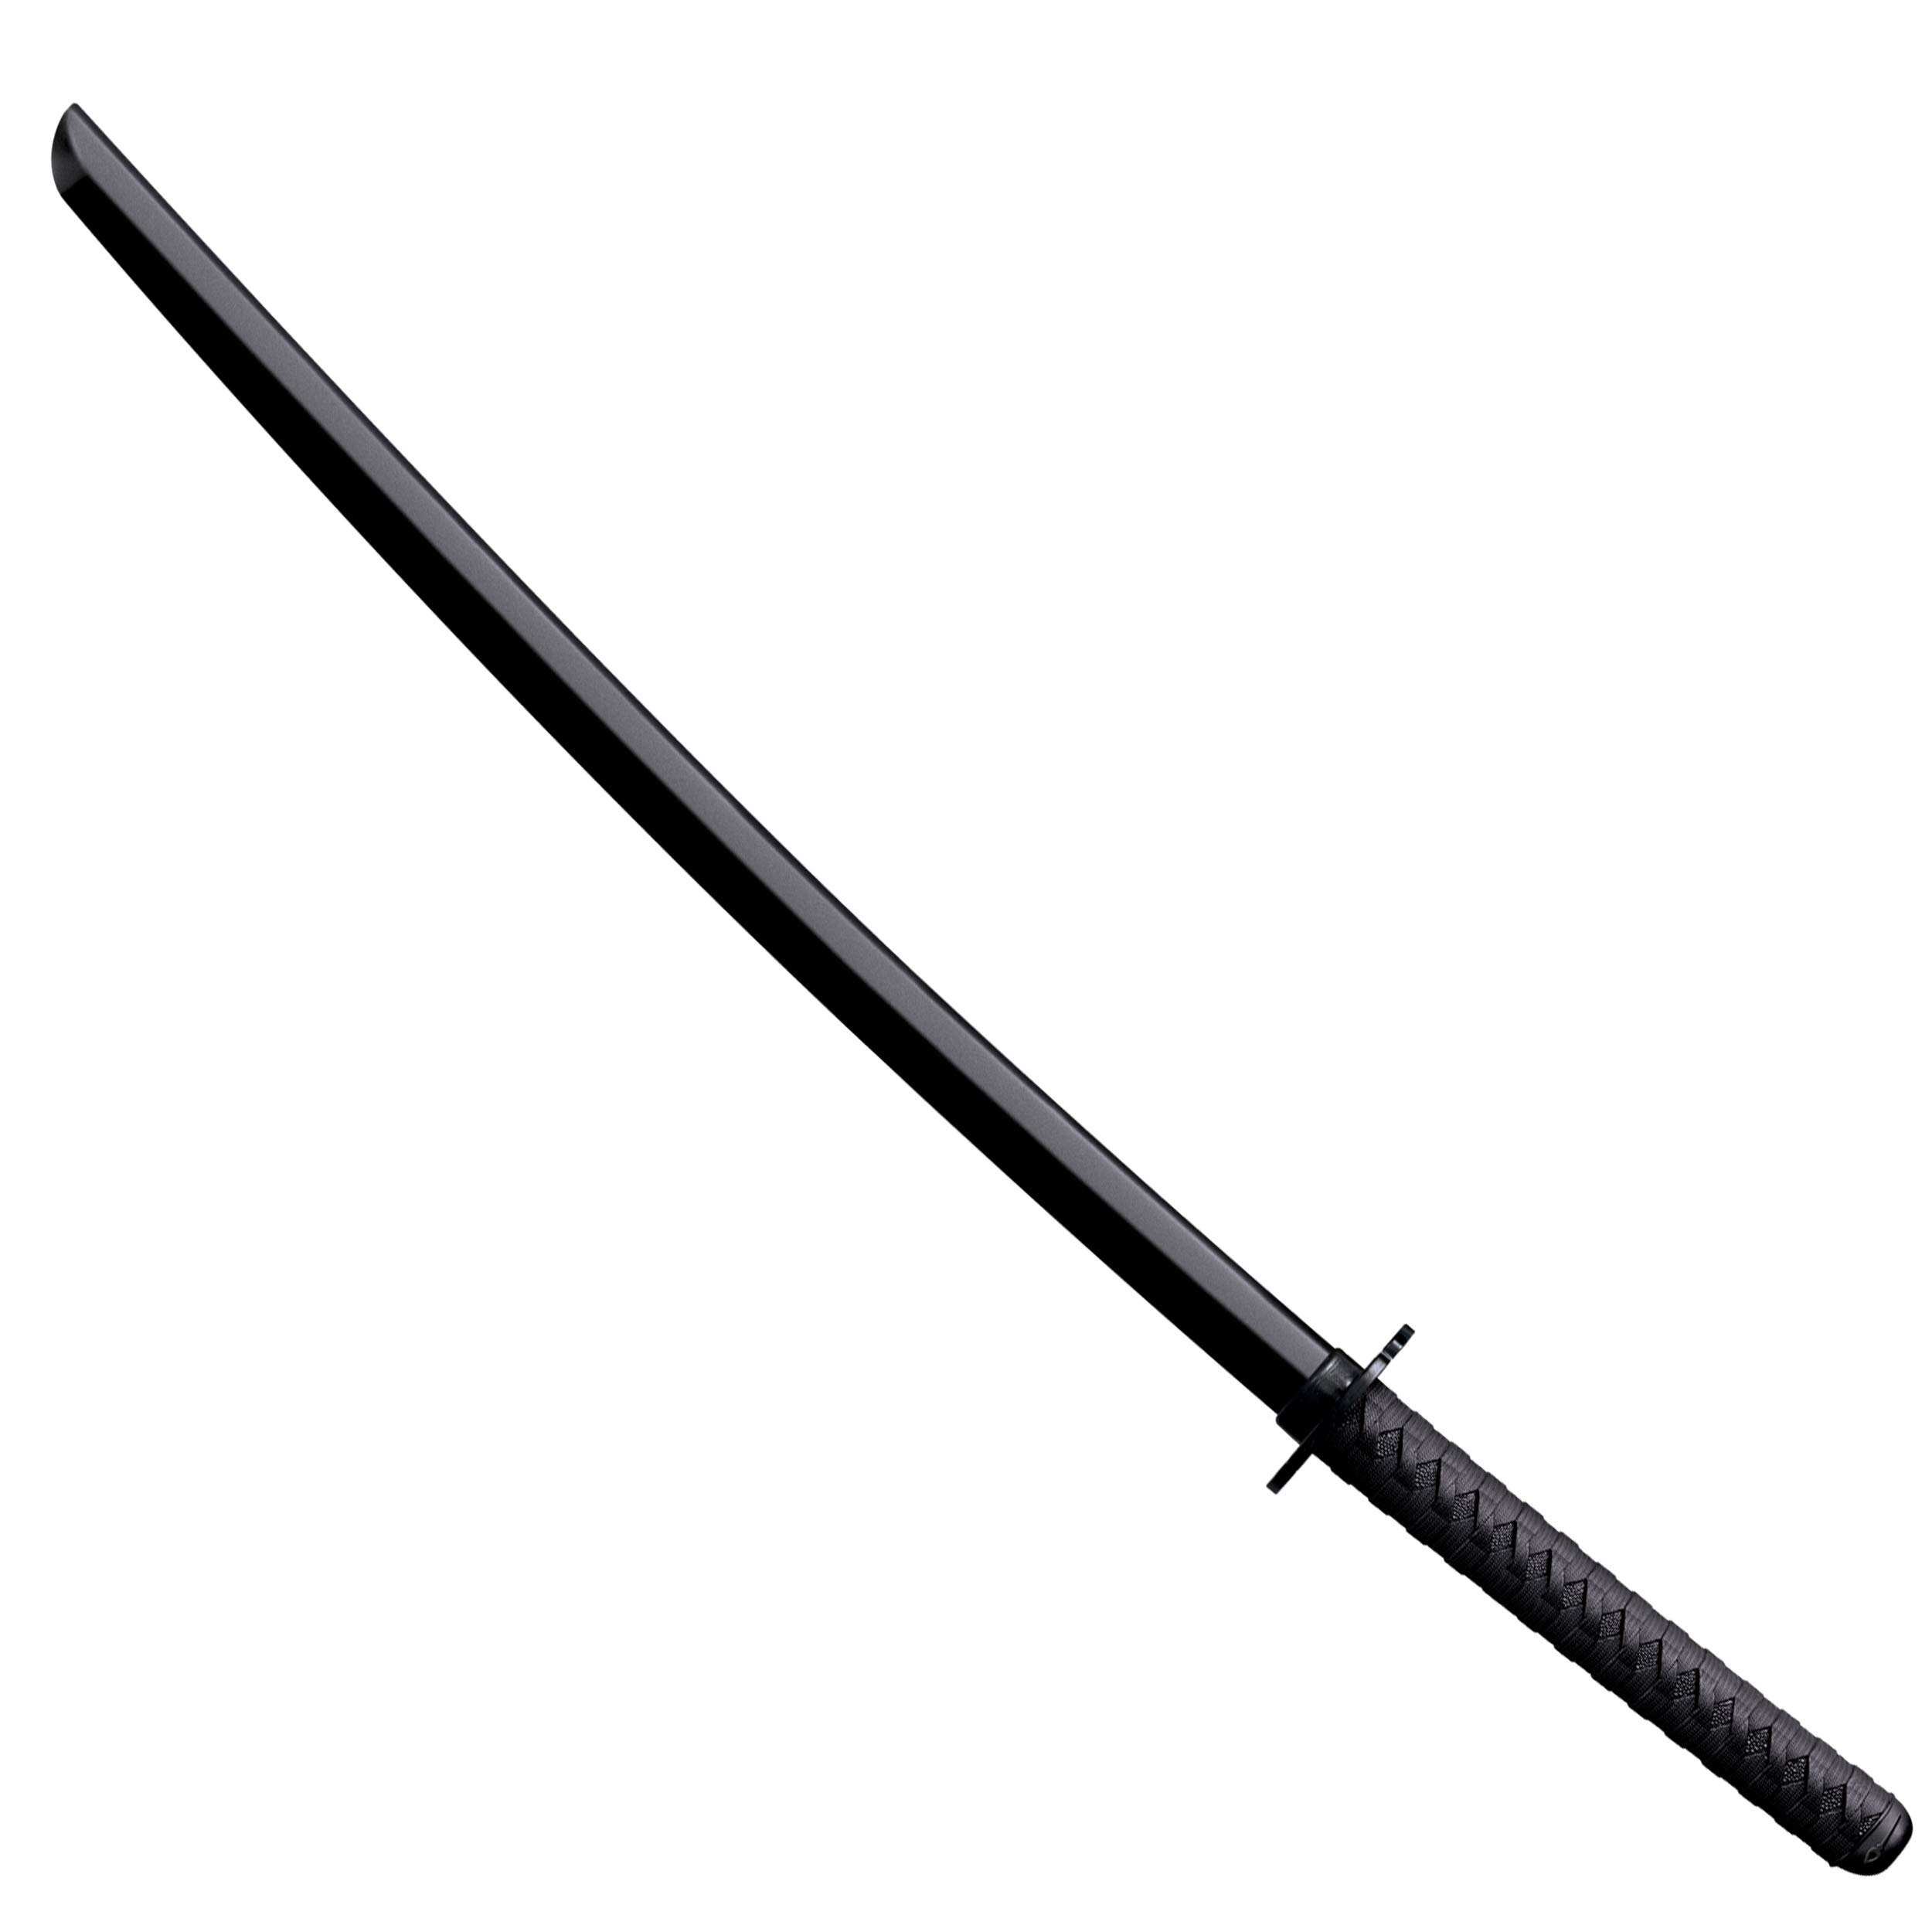 Cold Steel Bokken Martial Arts Polypropylene Training Sword (Black) $14 + Free Shipping w/ Prime or on $35+